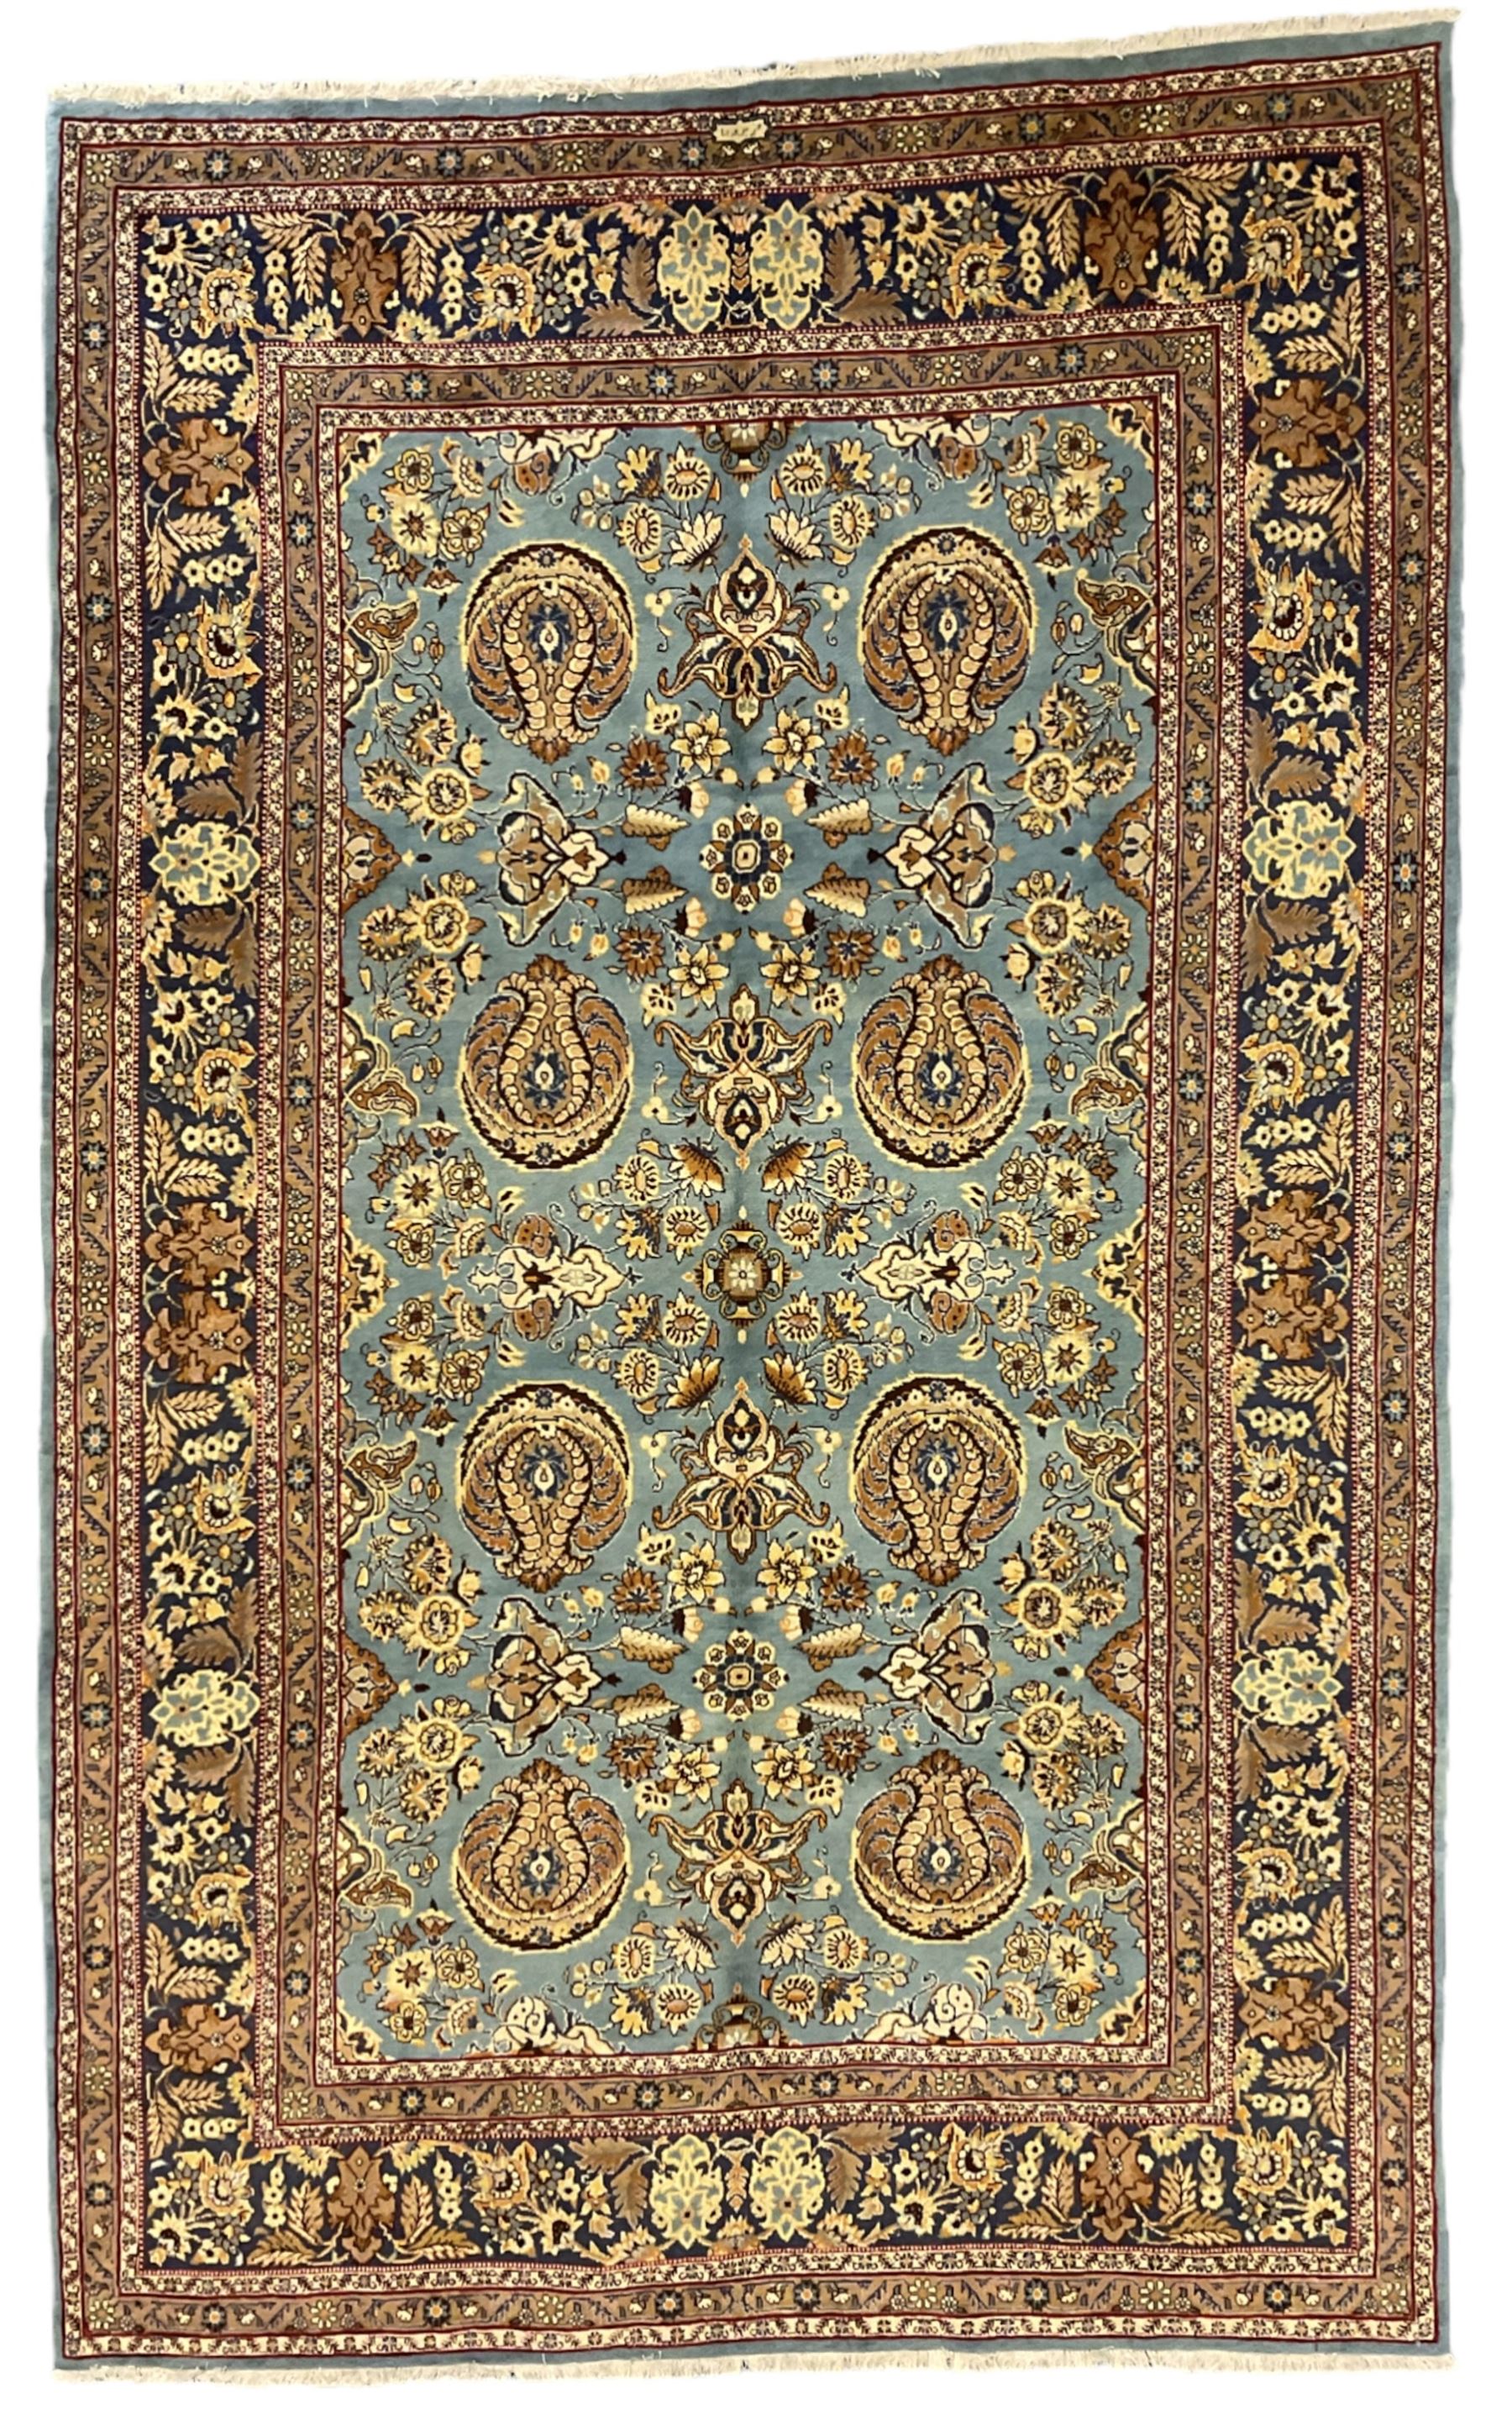 Central Persian Qum pale blue ground rug